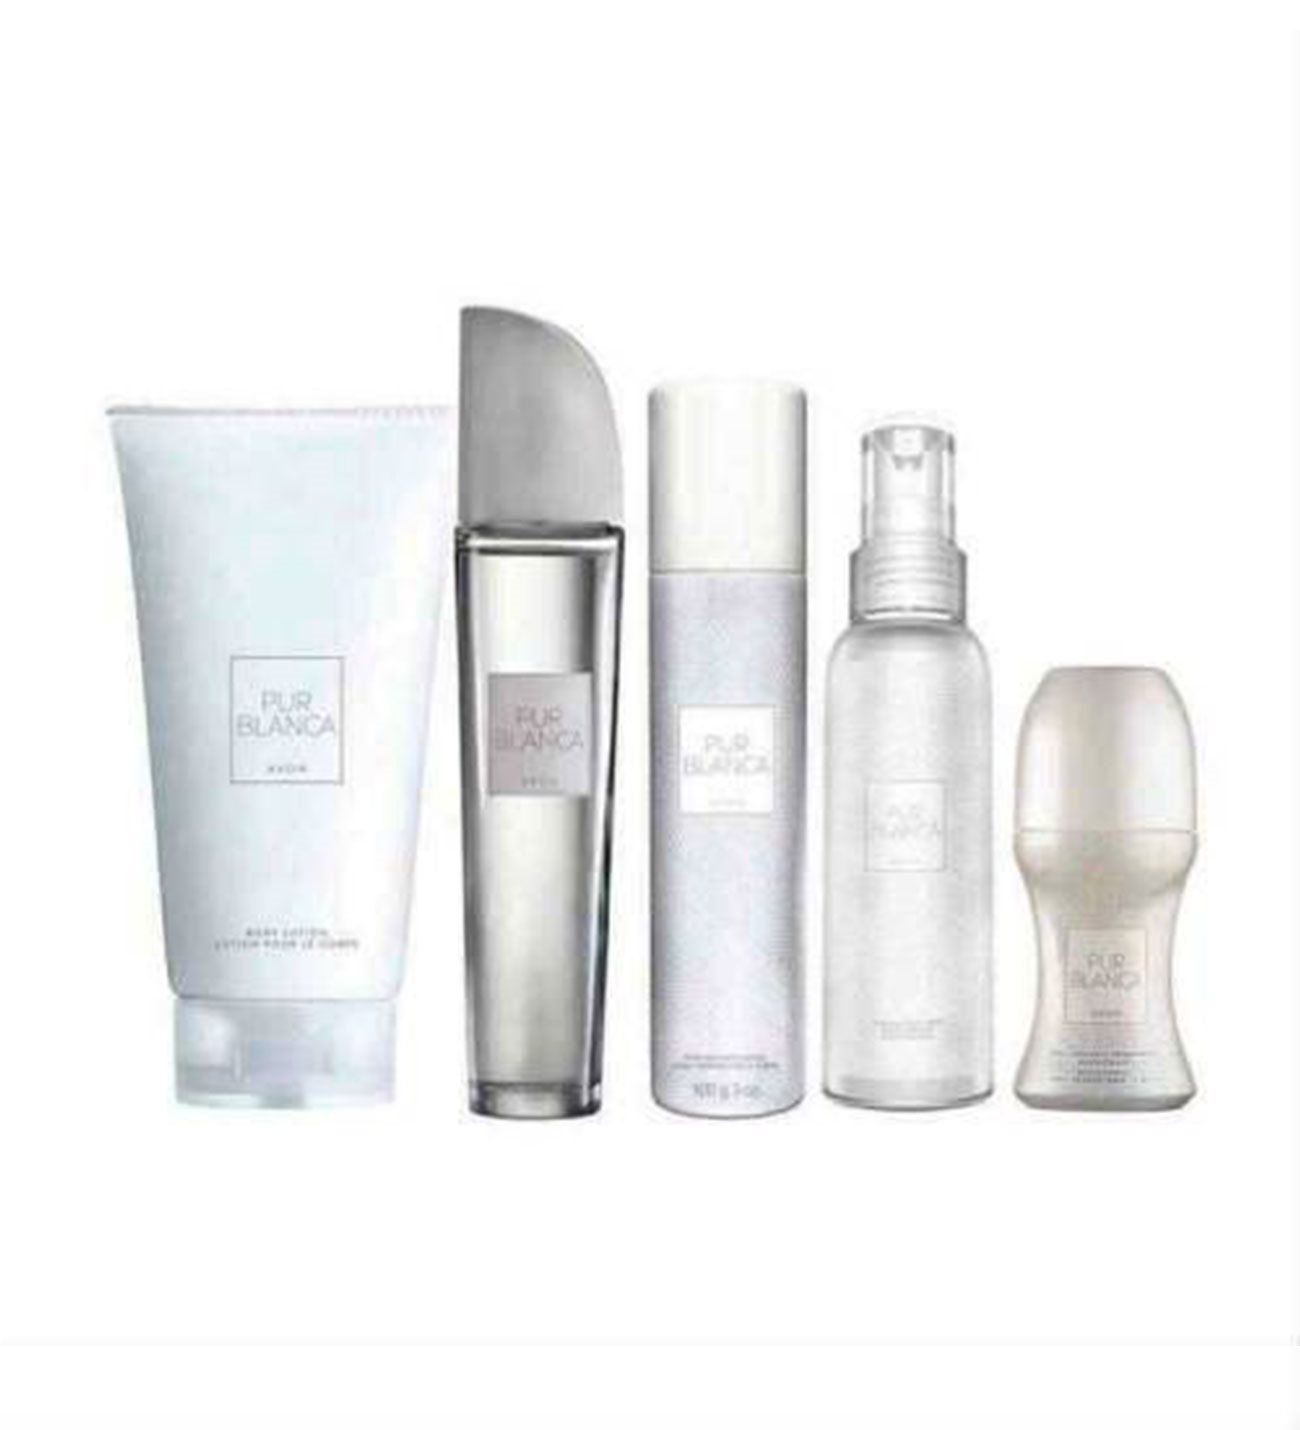 Pur Blanca 5-piece economic women's perfume set deodorant lotion, spray, cream beautiful sexy pleasant lasting impressive